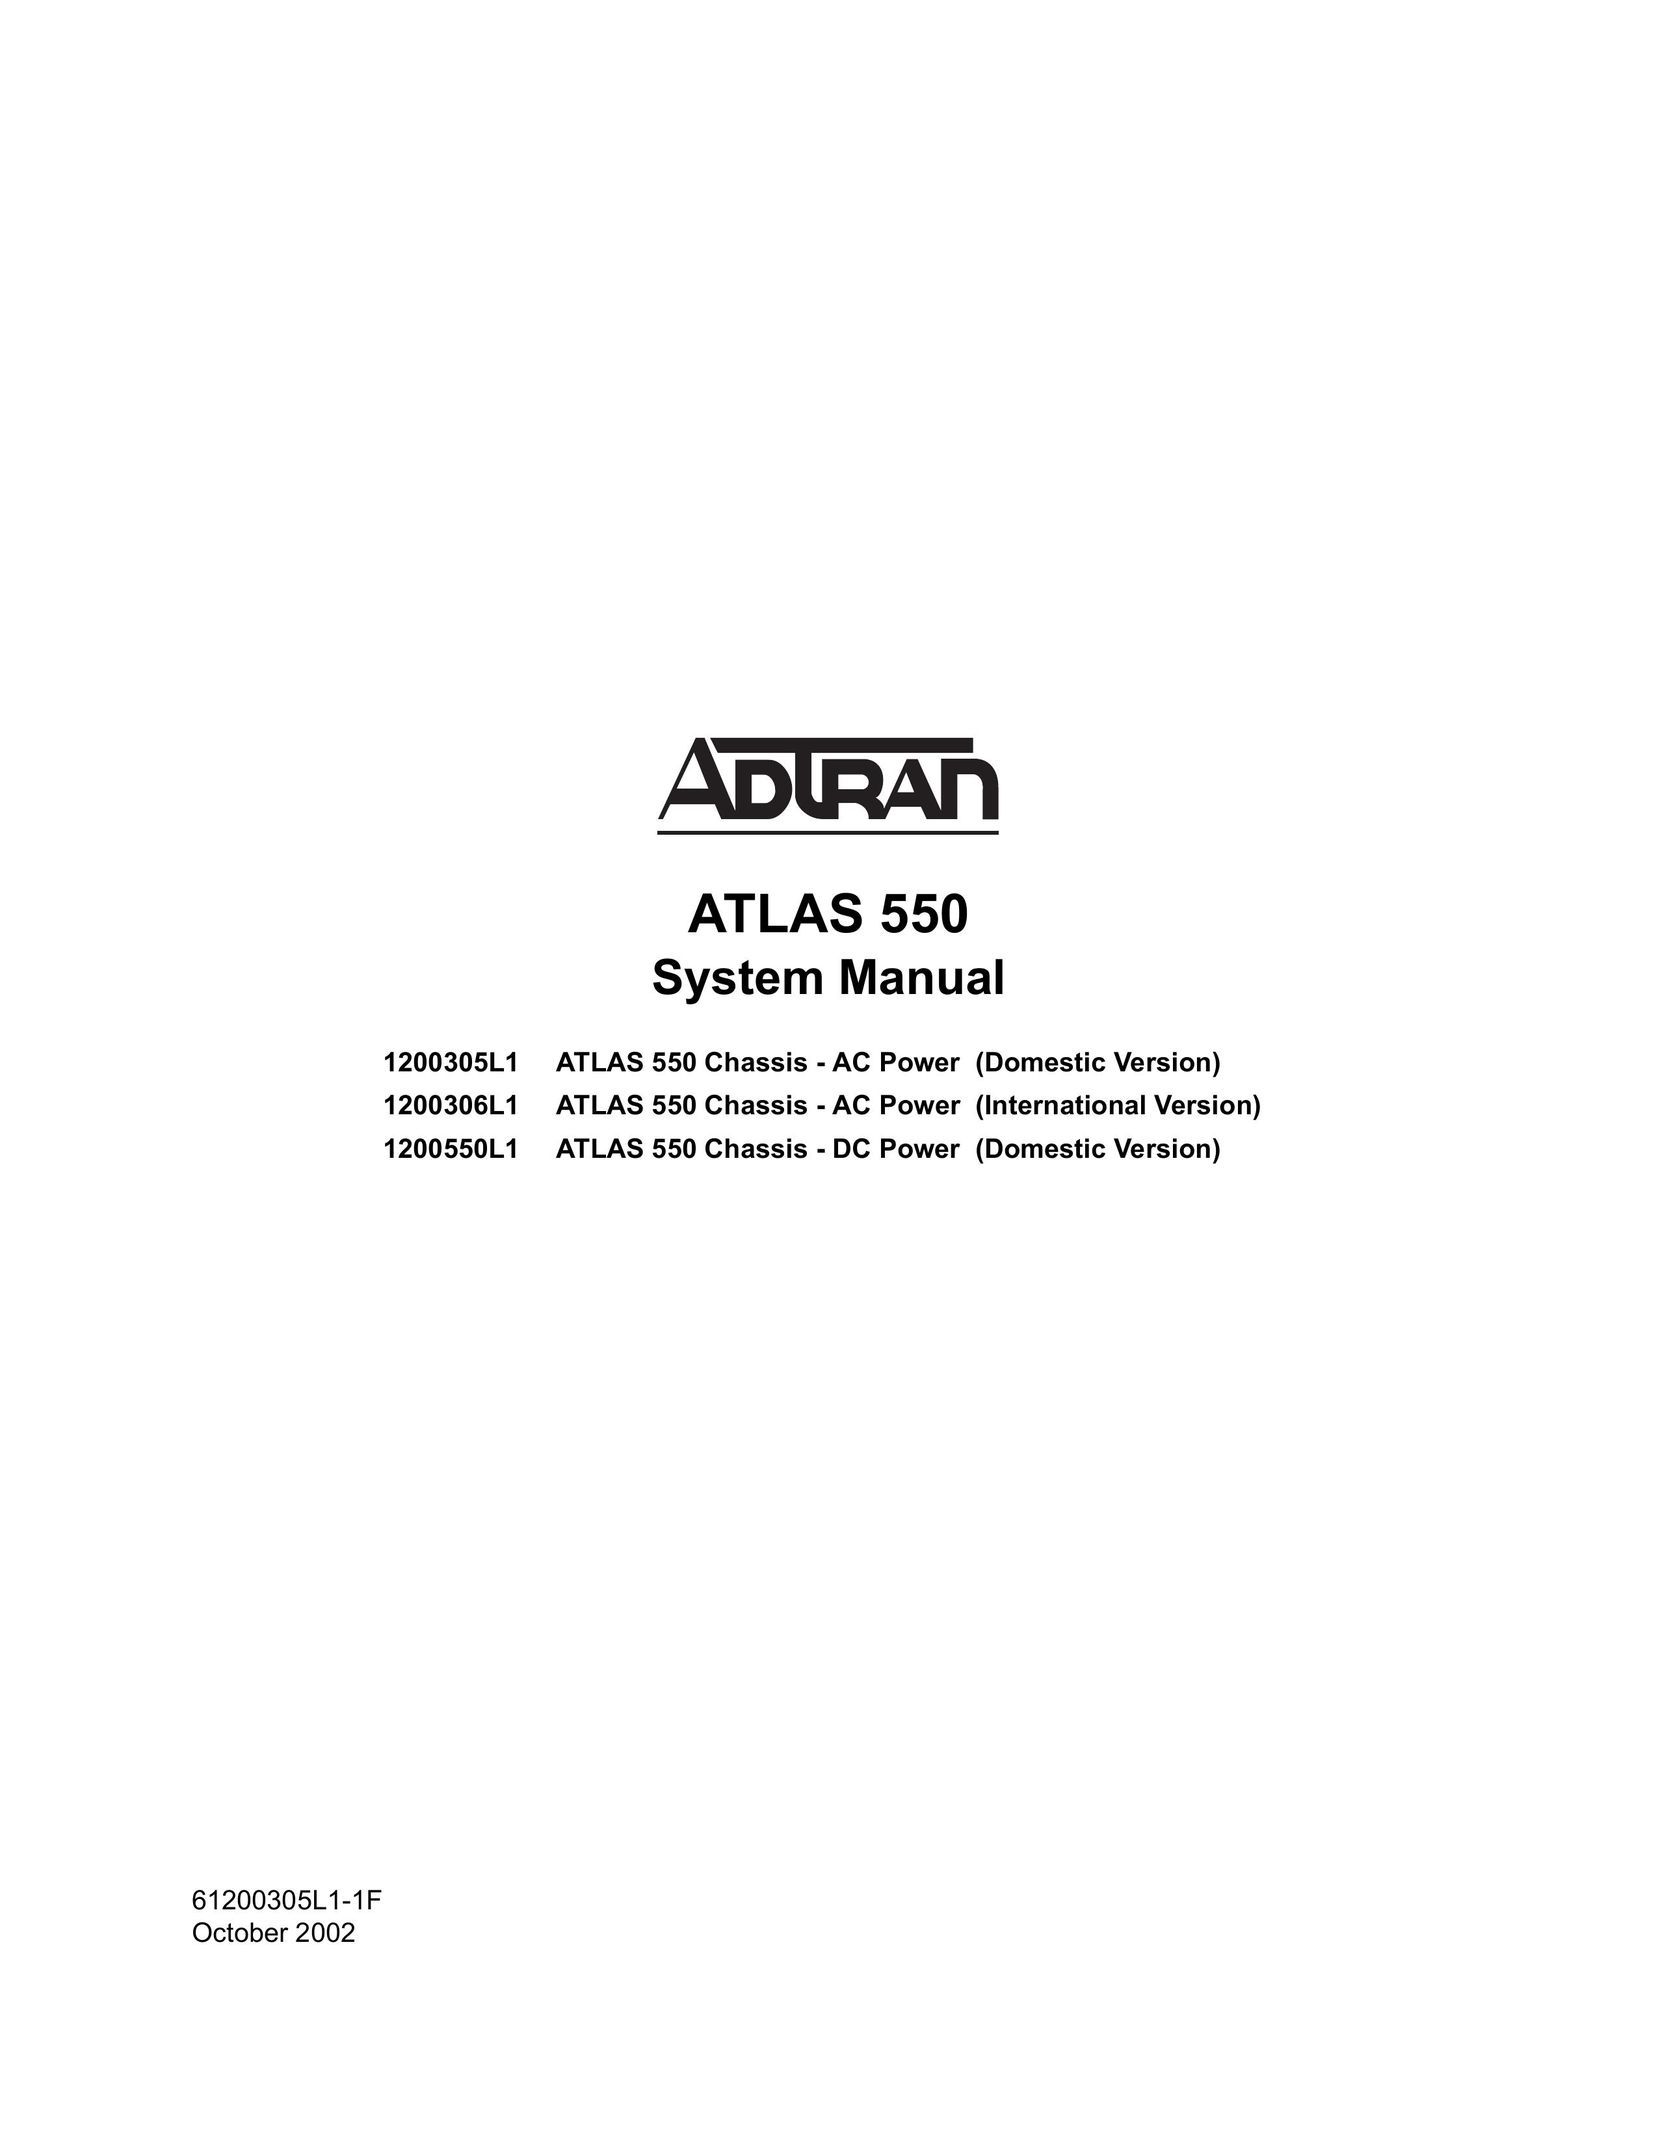 ADTRAN 1200305L1 Network Router User Manual